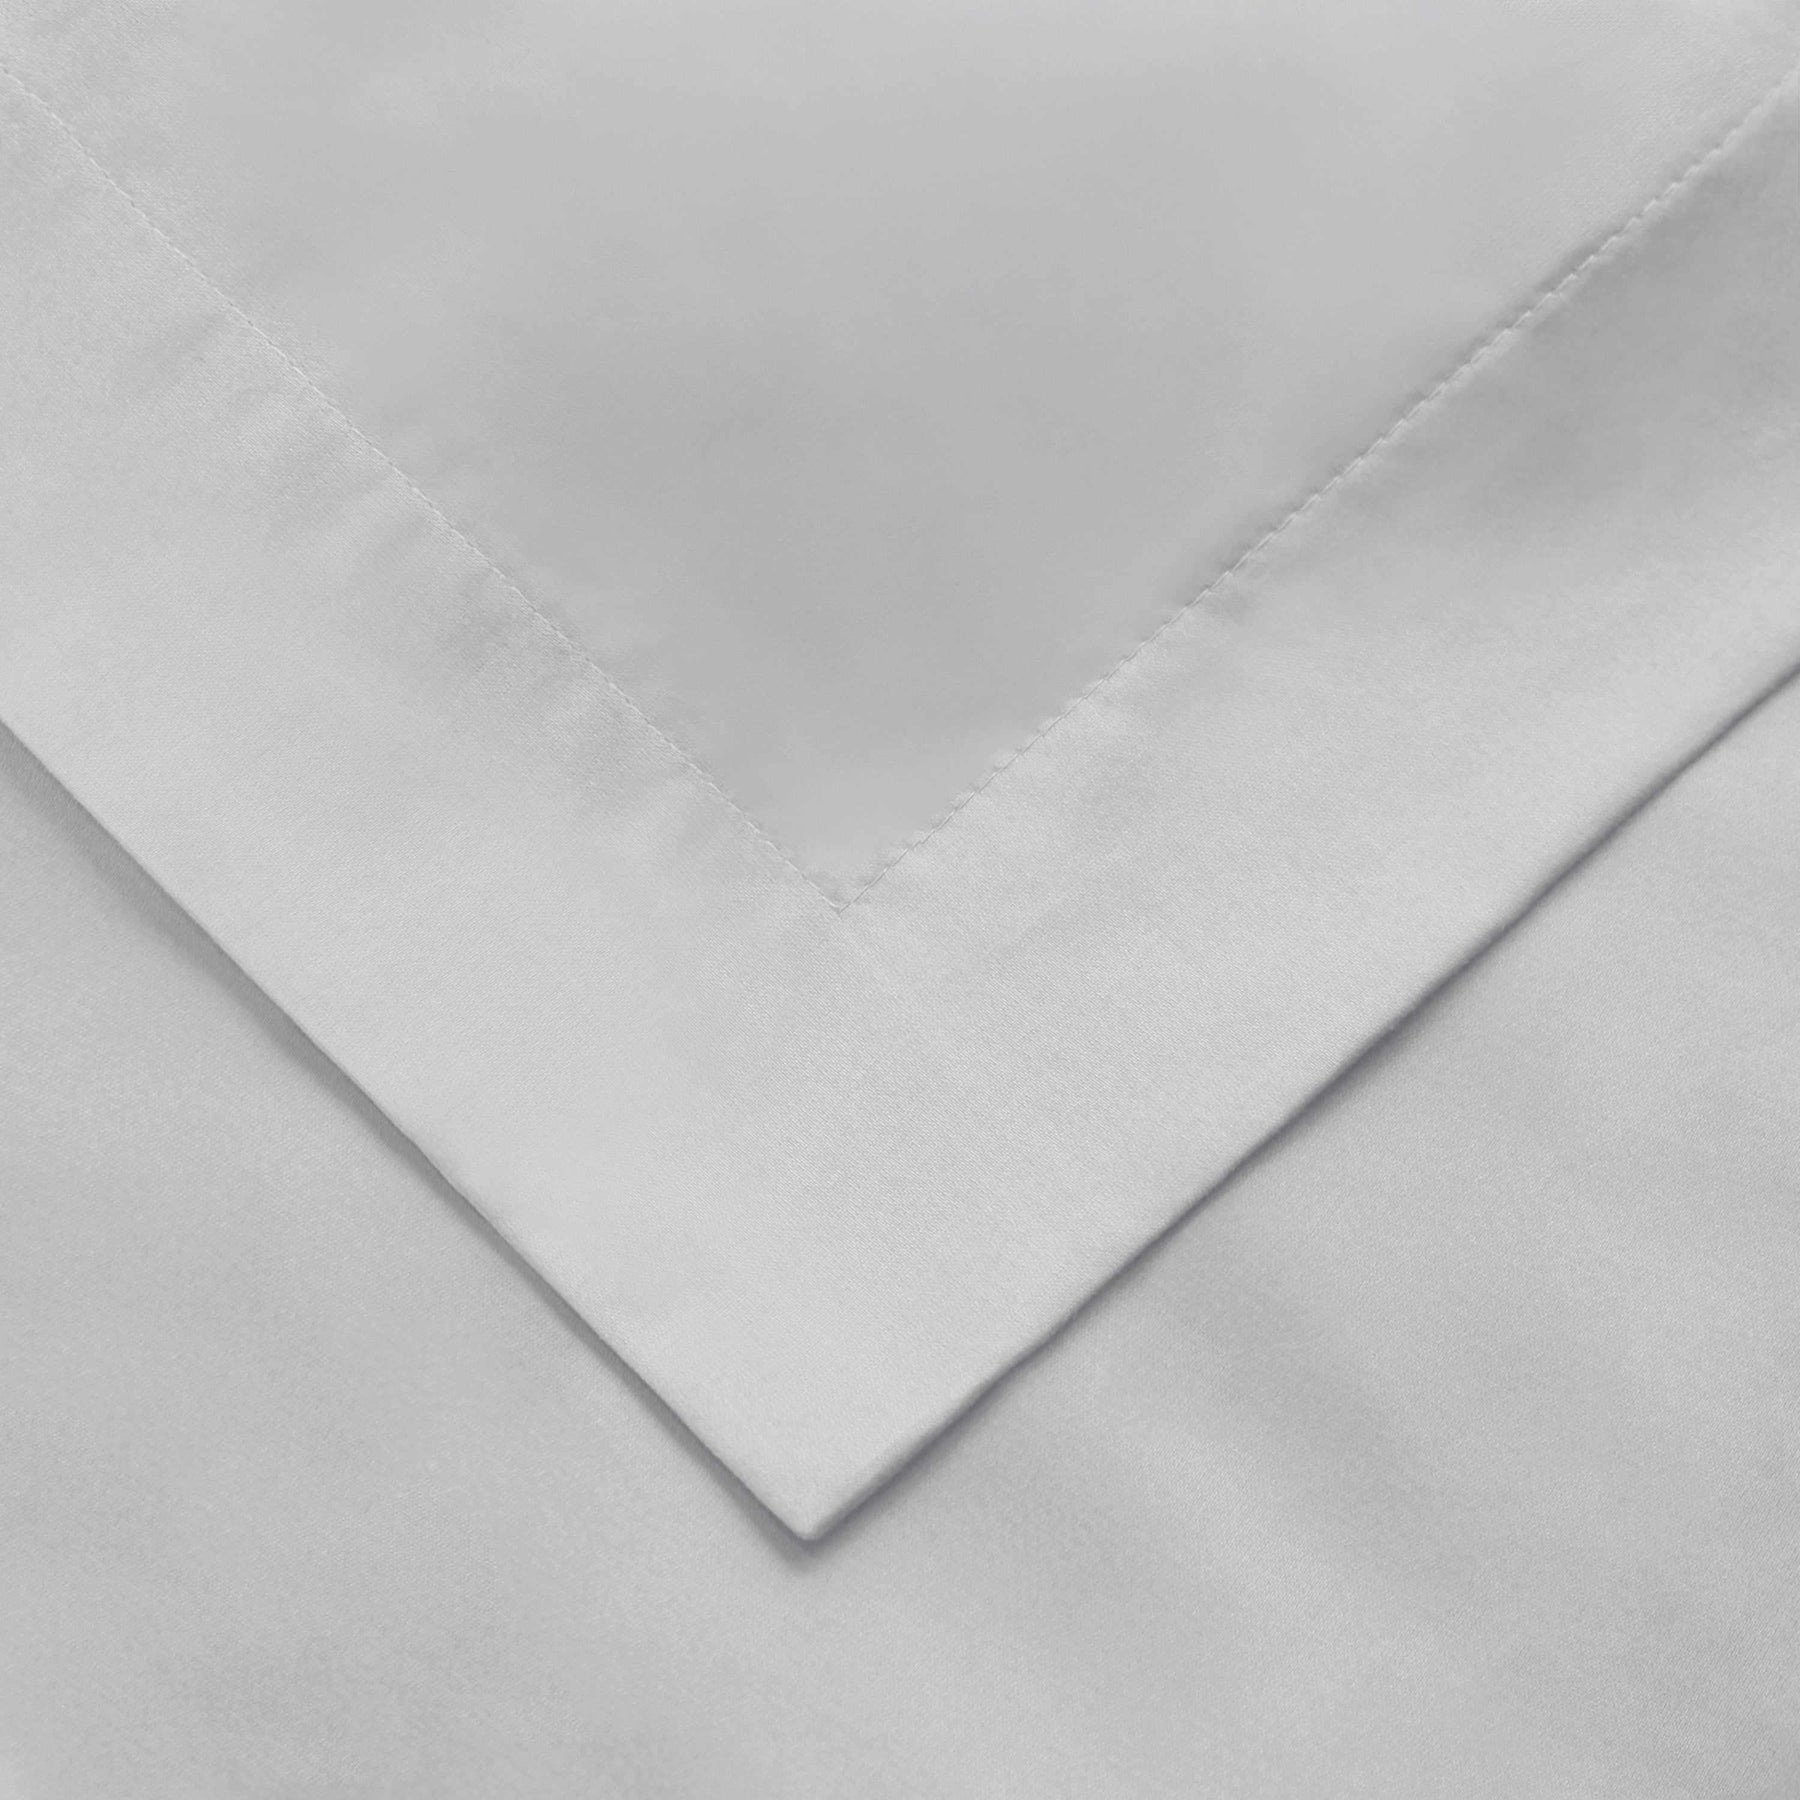  Superior Solid 1500 Thread Count Egyptian Cotton Duvet Cover Set - Platinum